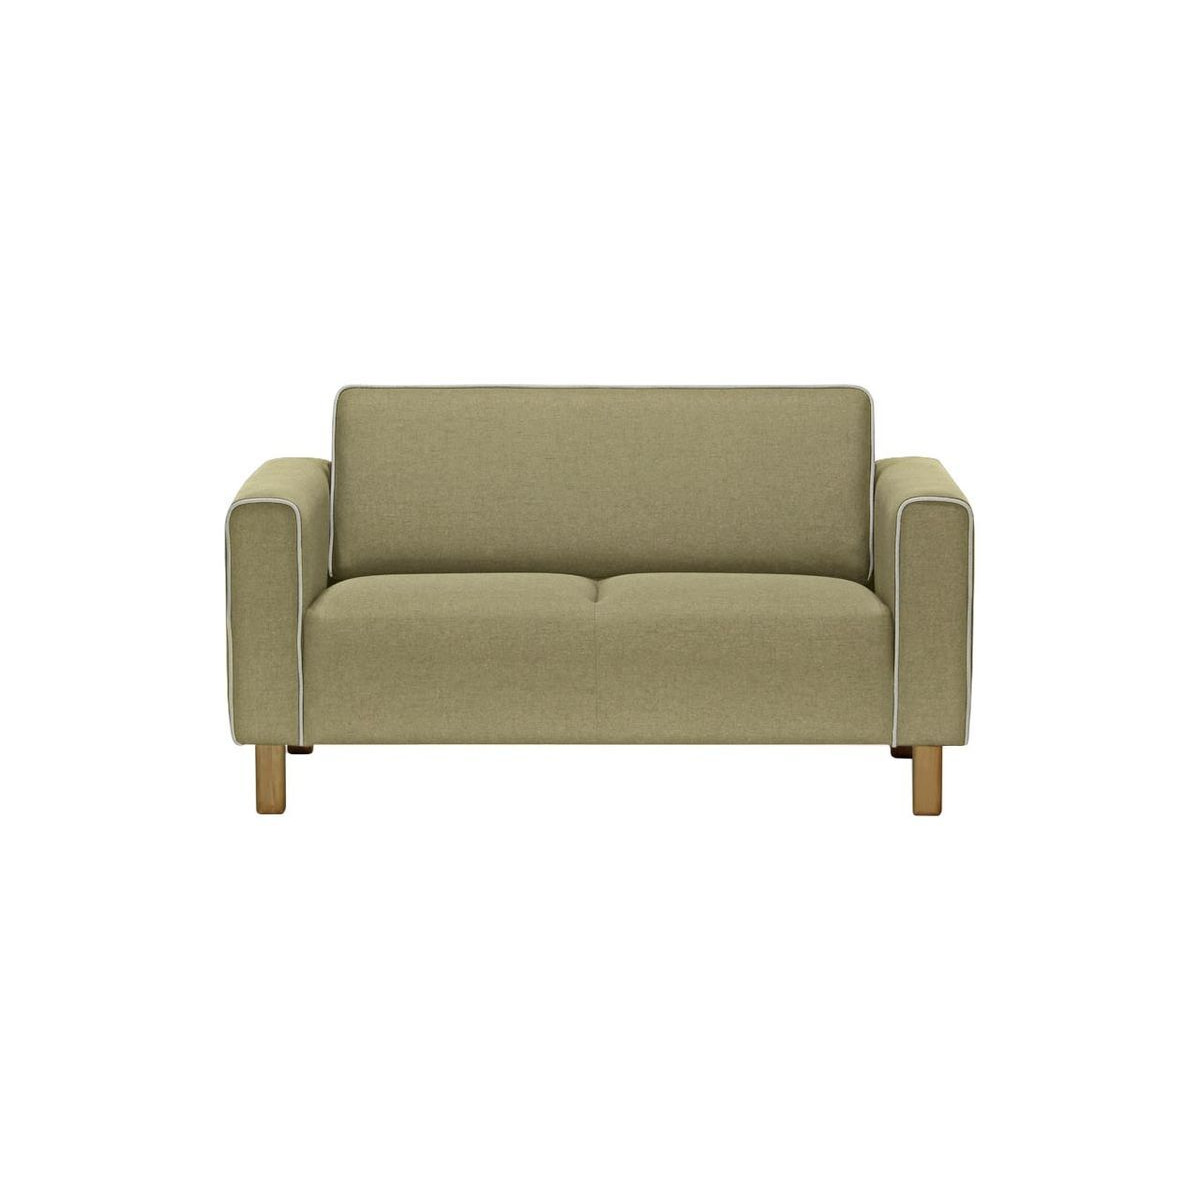 Liva 2 Seater Sofa, beige - image 1